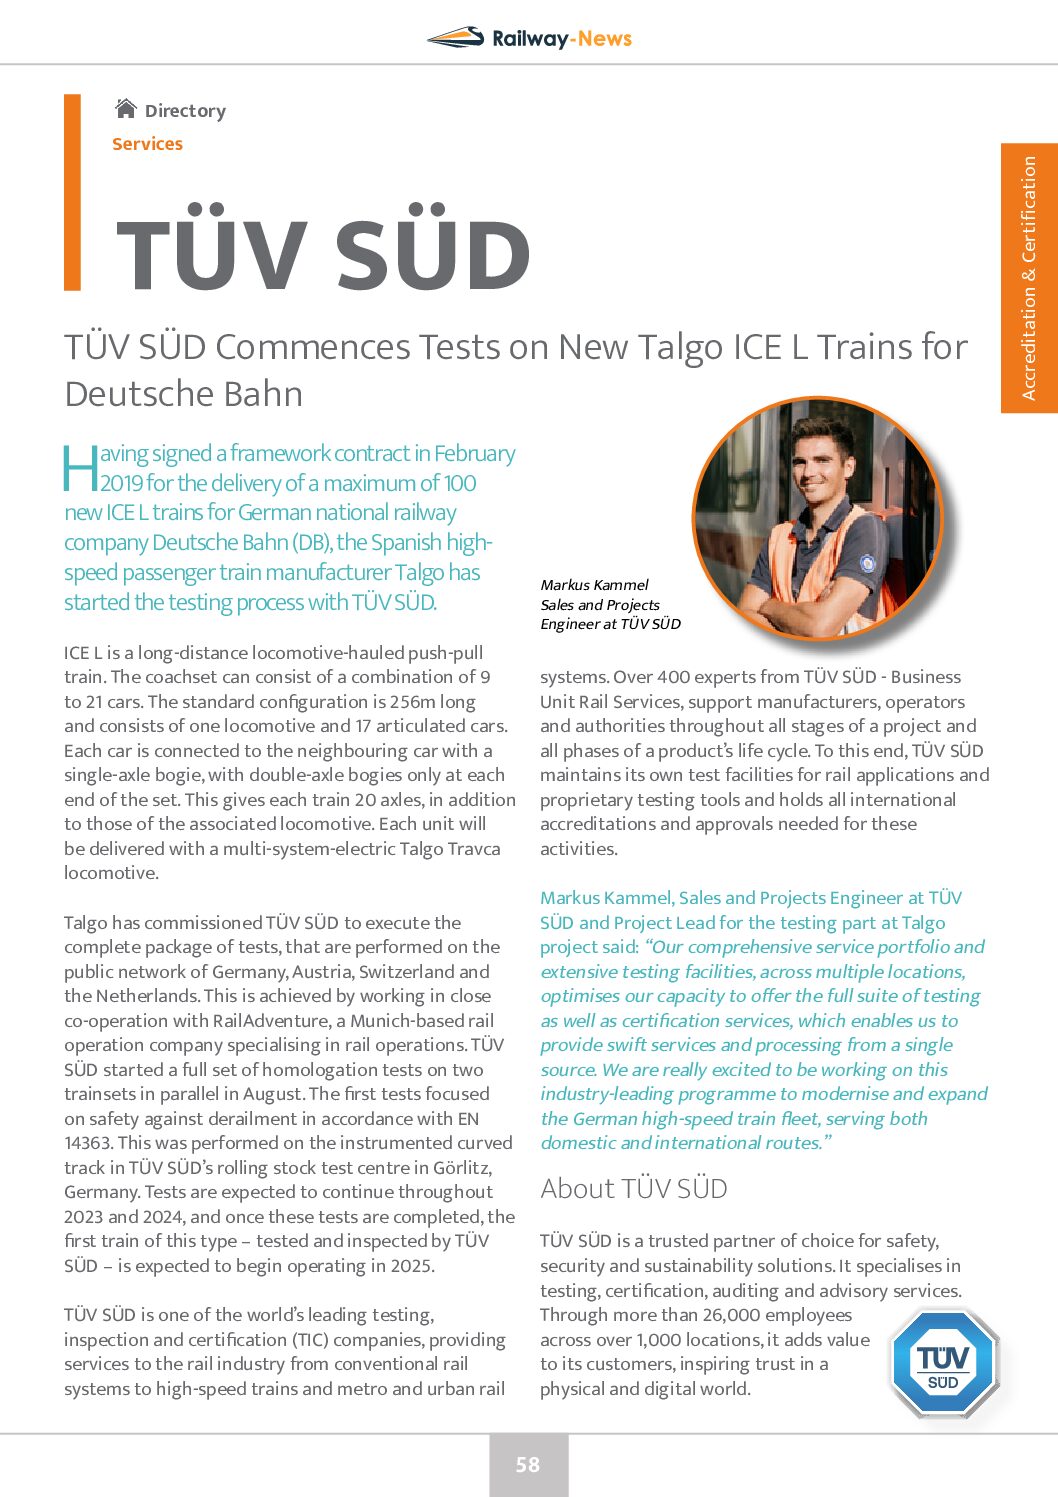 TÜV SÜD Commences Tests on New Talgo ICE L Trains for Deutsche Bahn